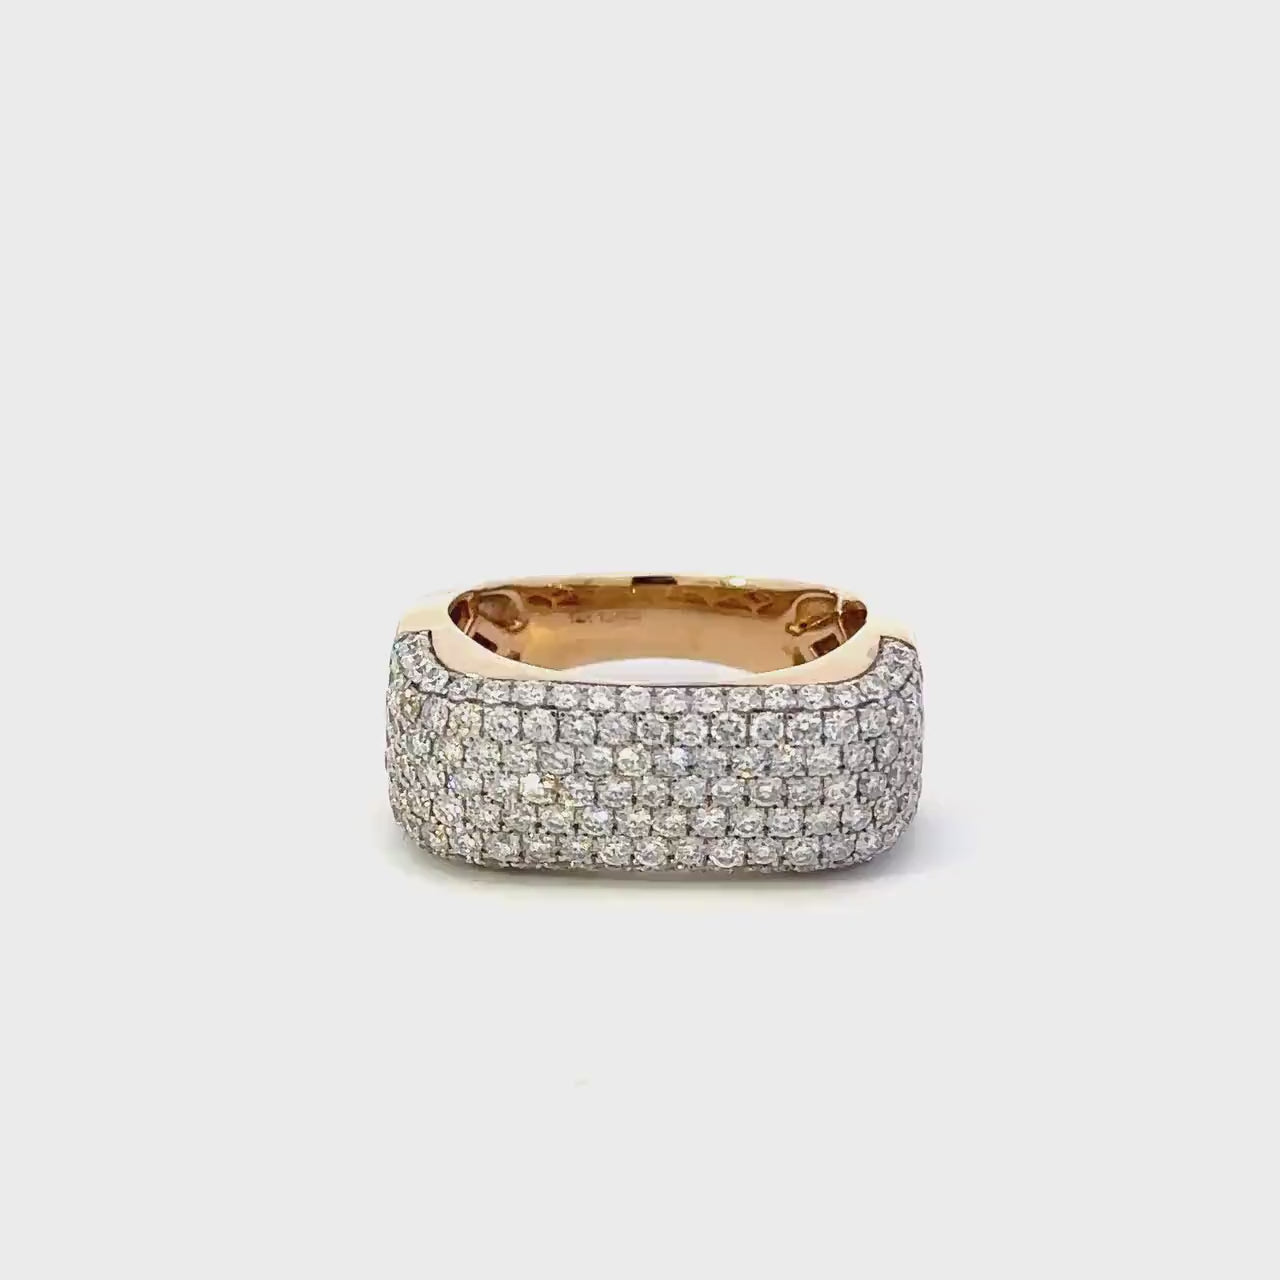 Sparkling 14K White Gold Diamond Ring